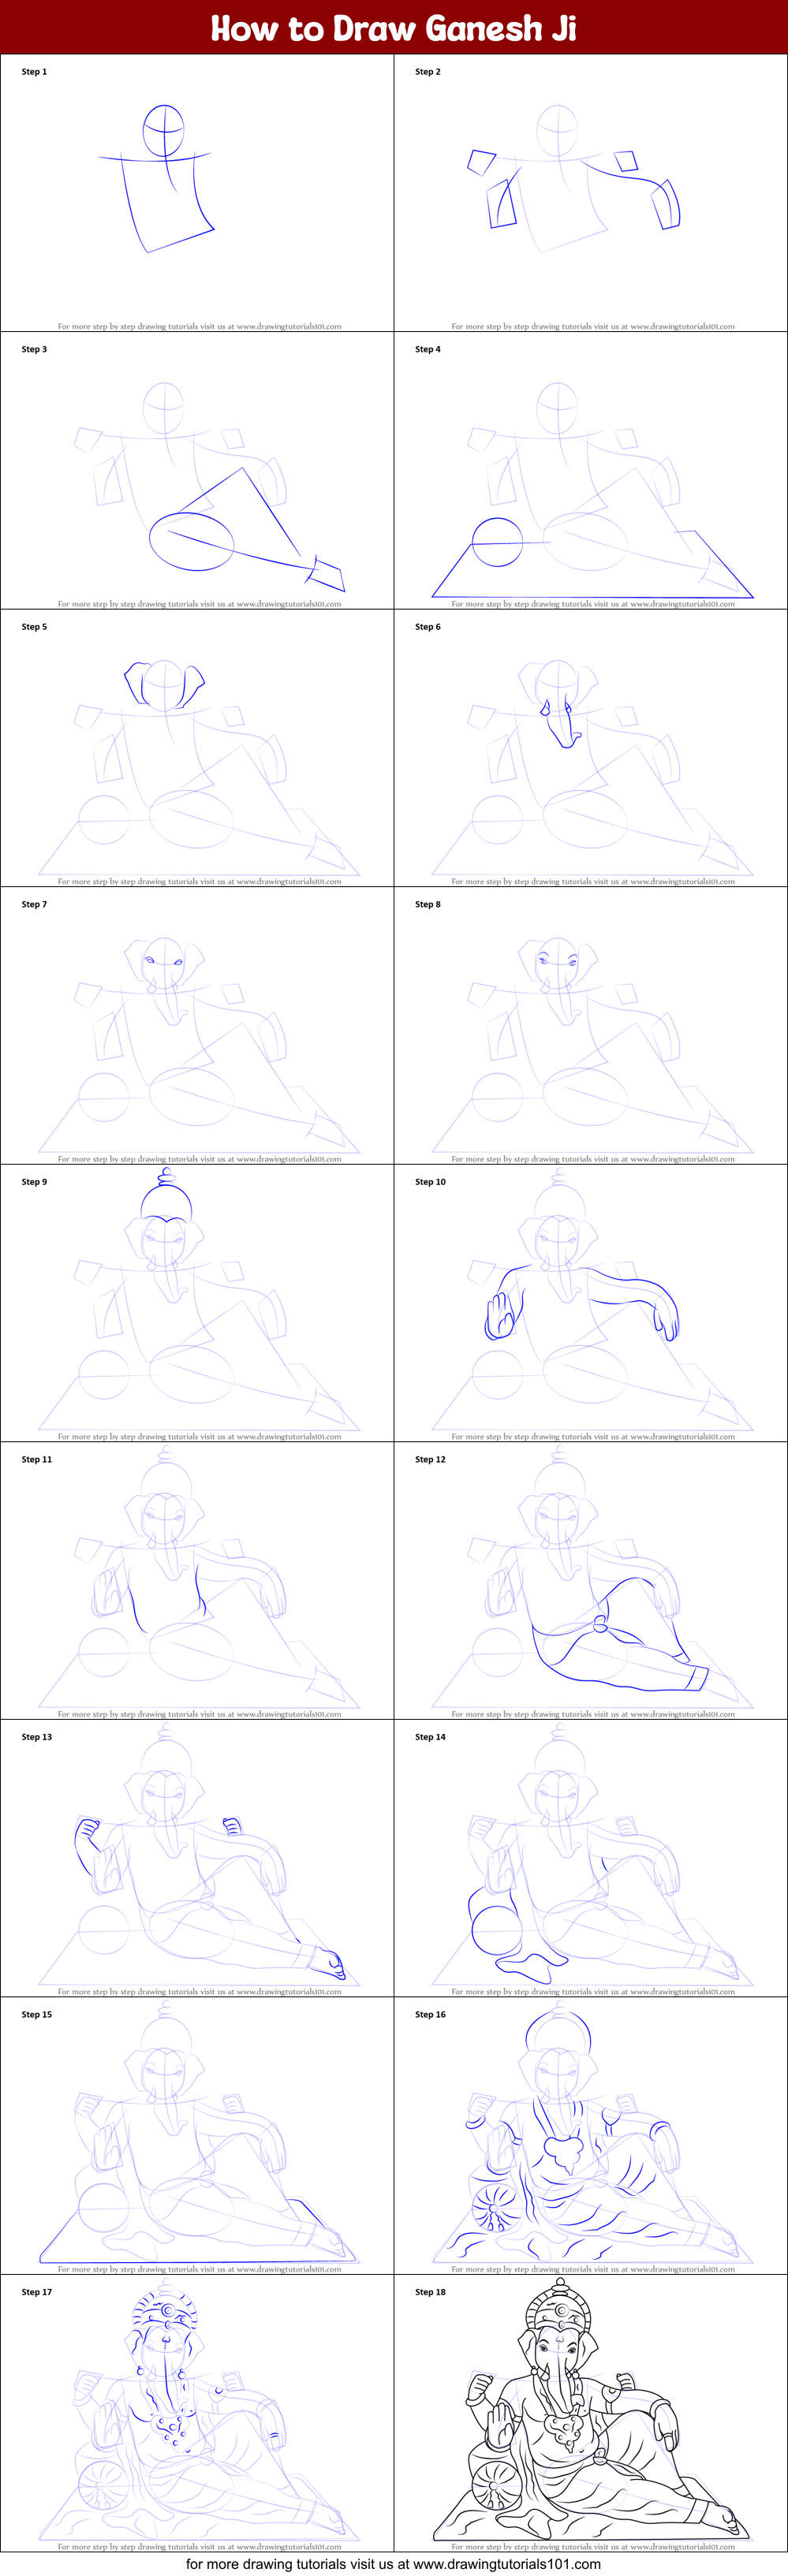 How to Draw Ganesh Ji printable step by step drawing sheet